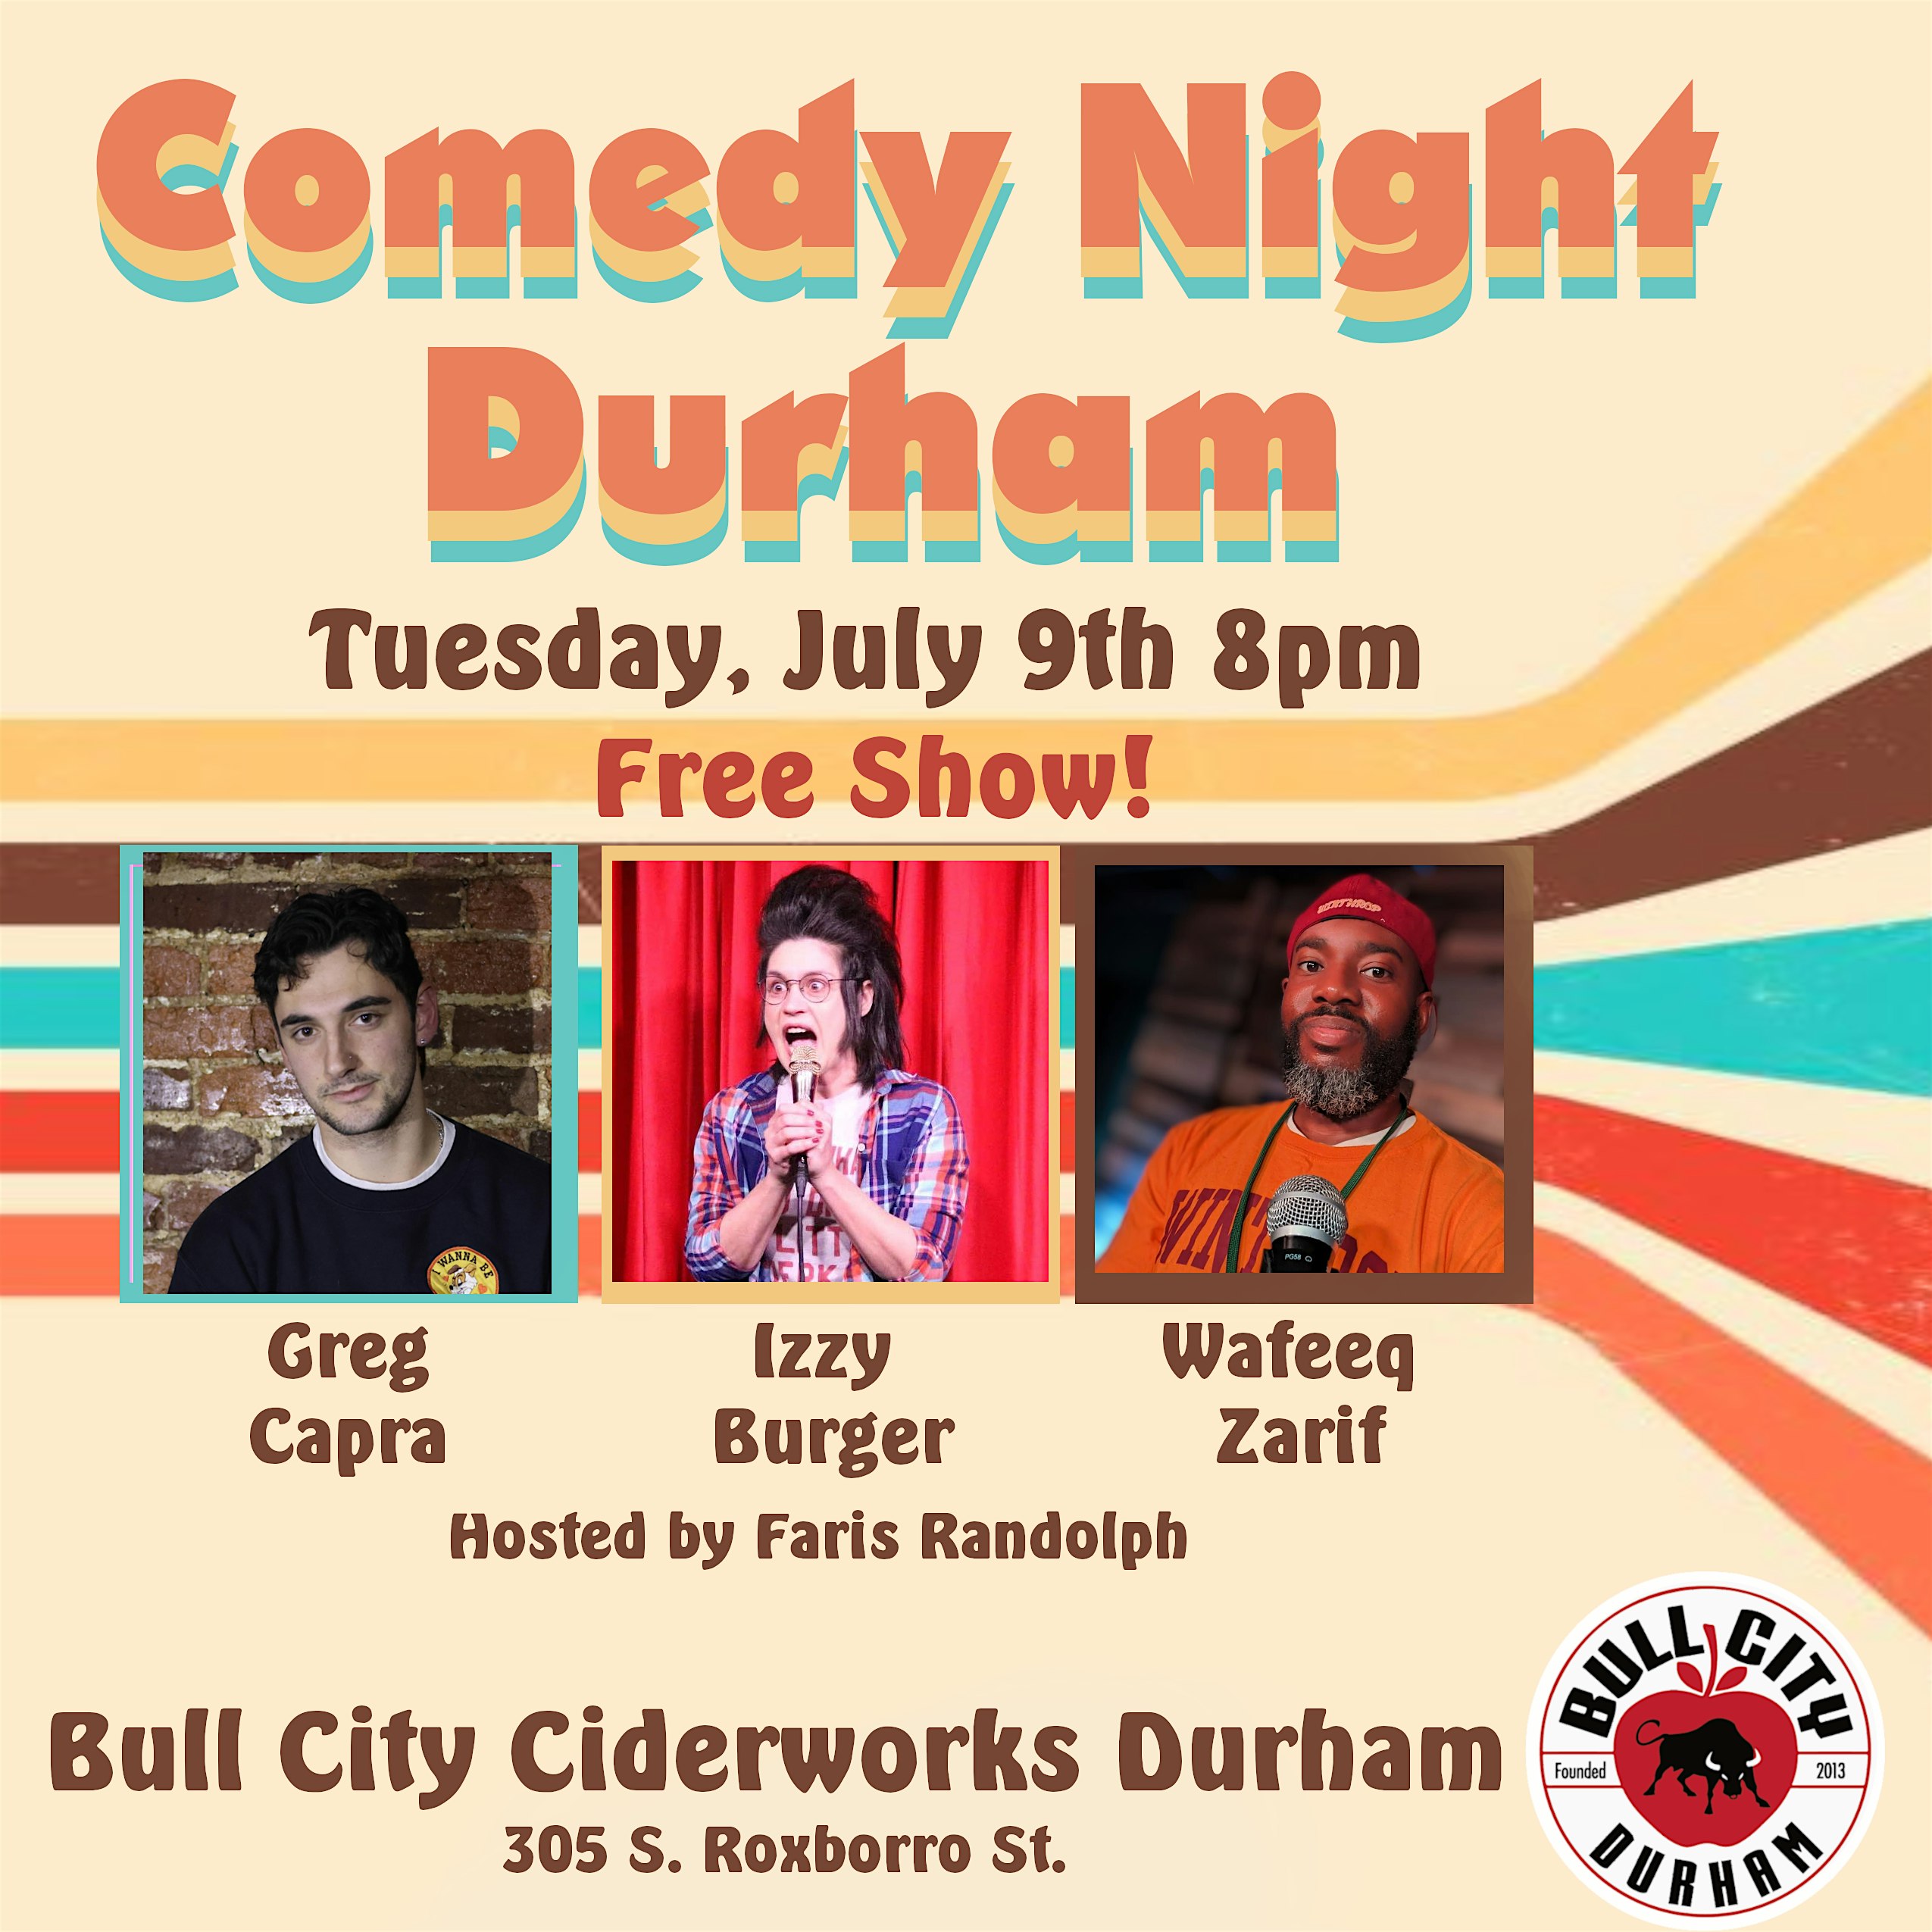 Comedy Night Durham @ The Bull City Ciderworks in Durham.